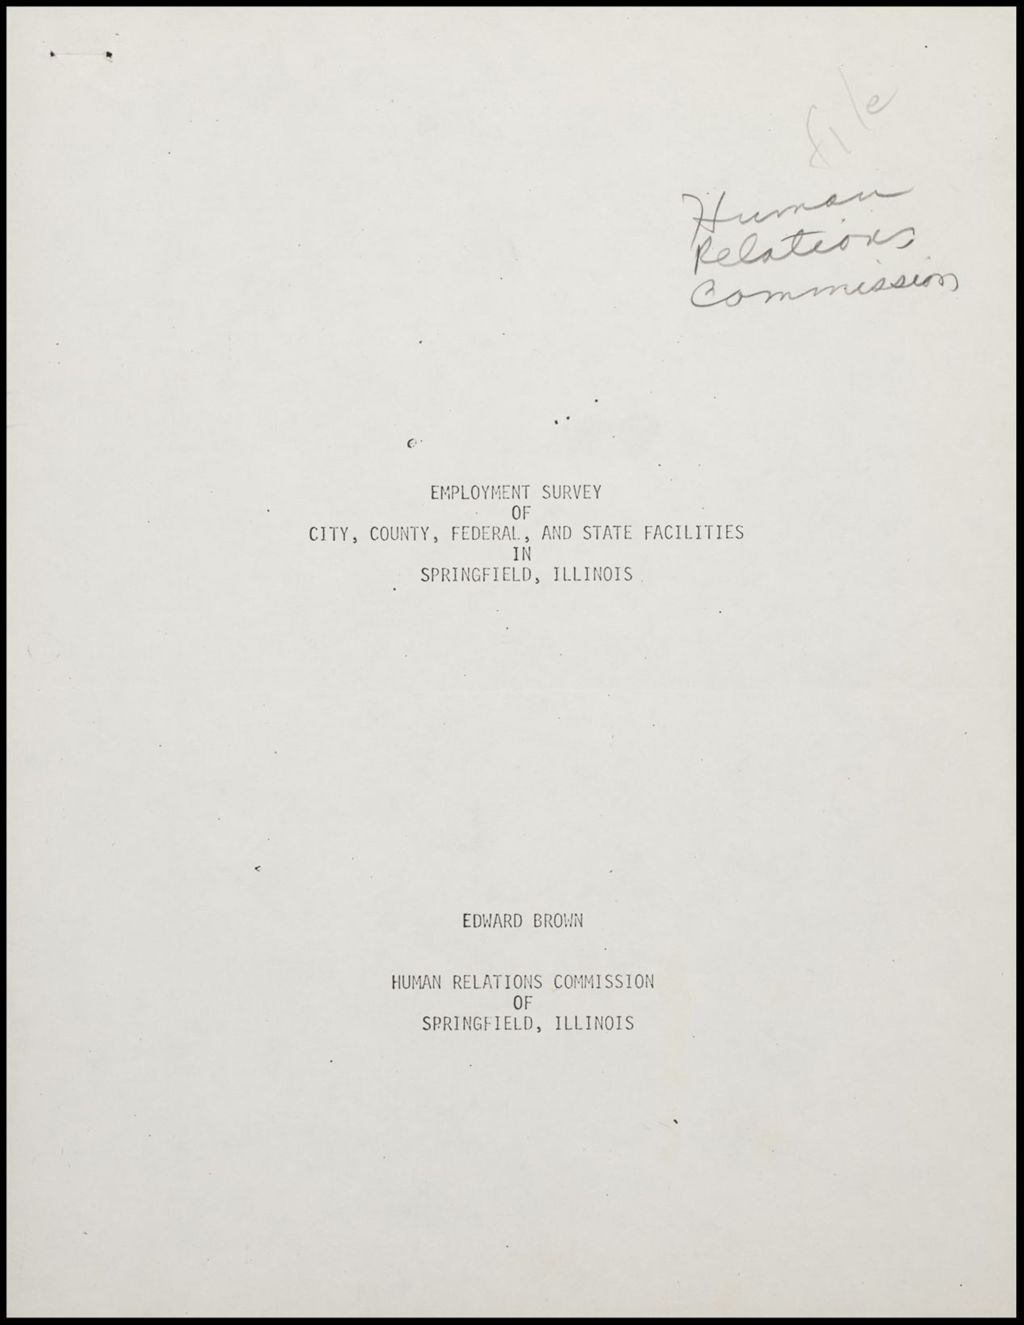 Human relations Committee, 1967-1968 (Folder IV-1050)